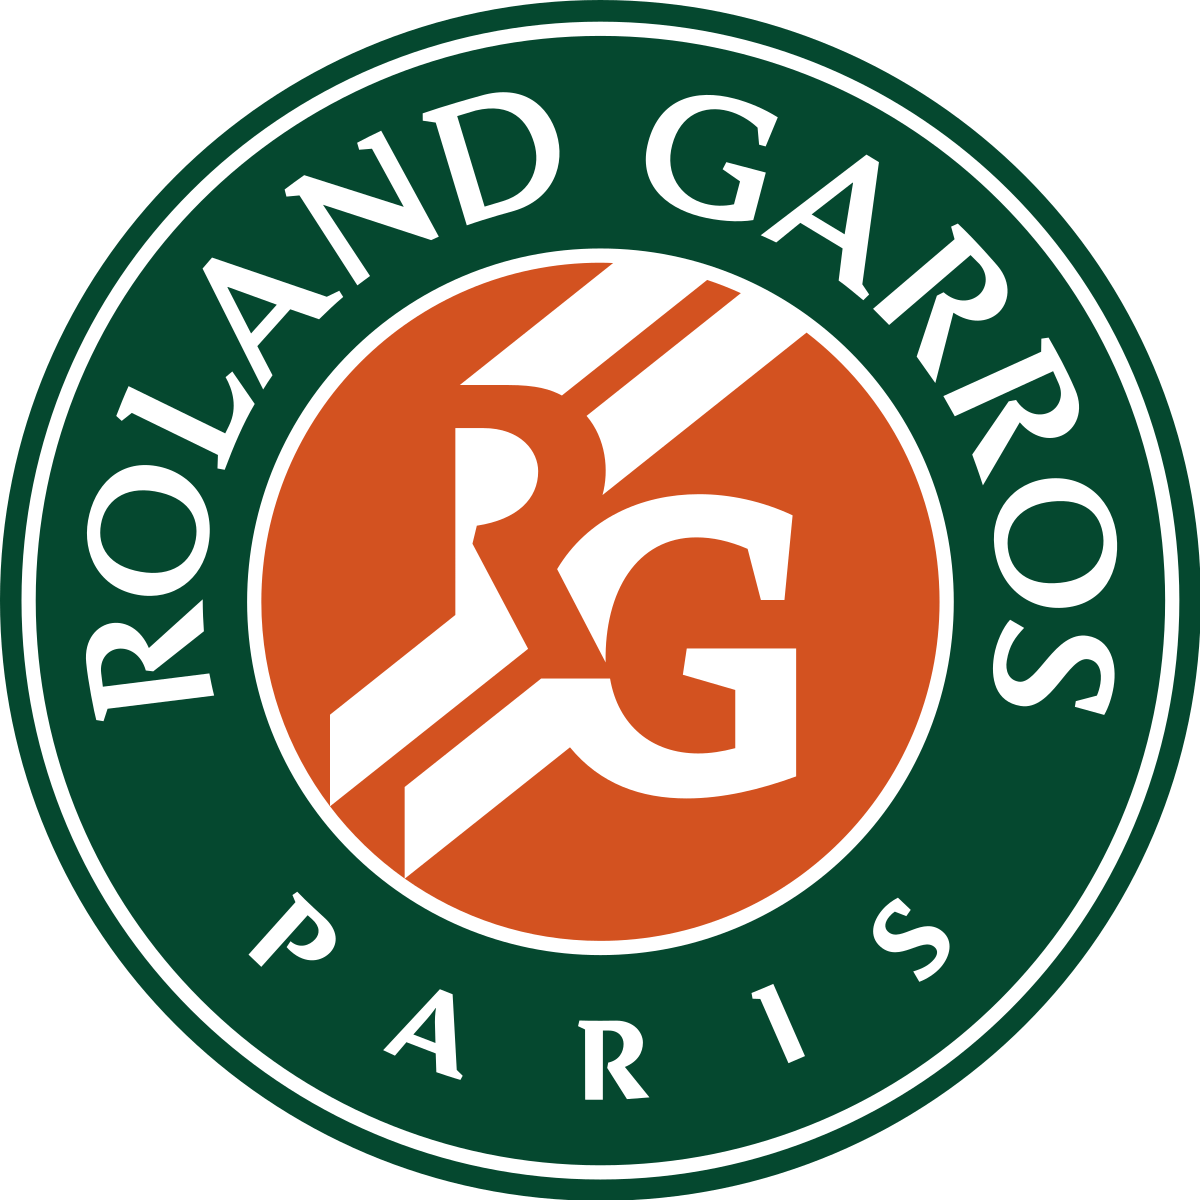 RG Paris Logo - French Open